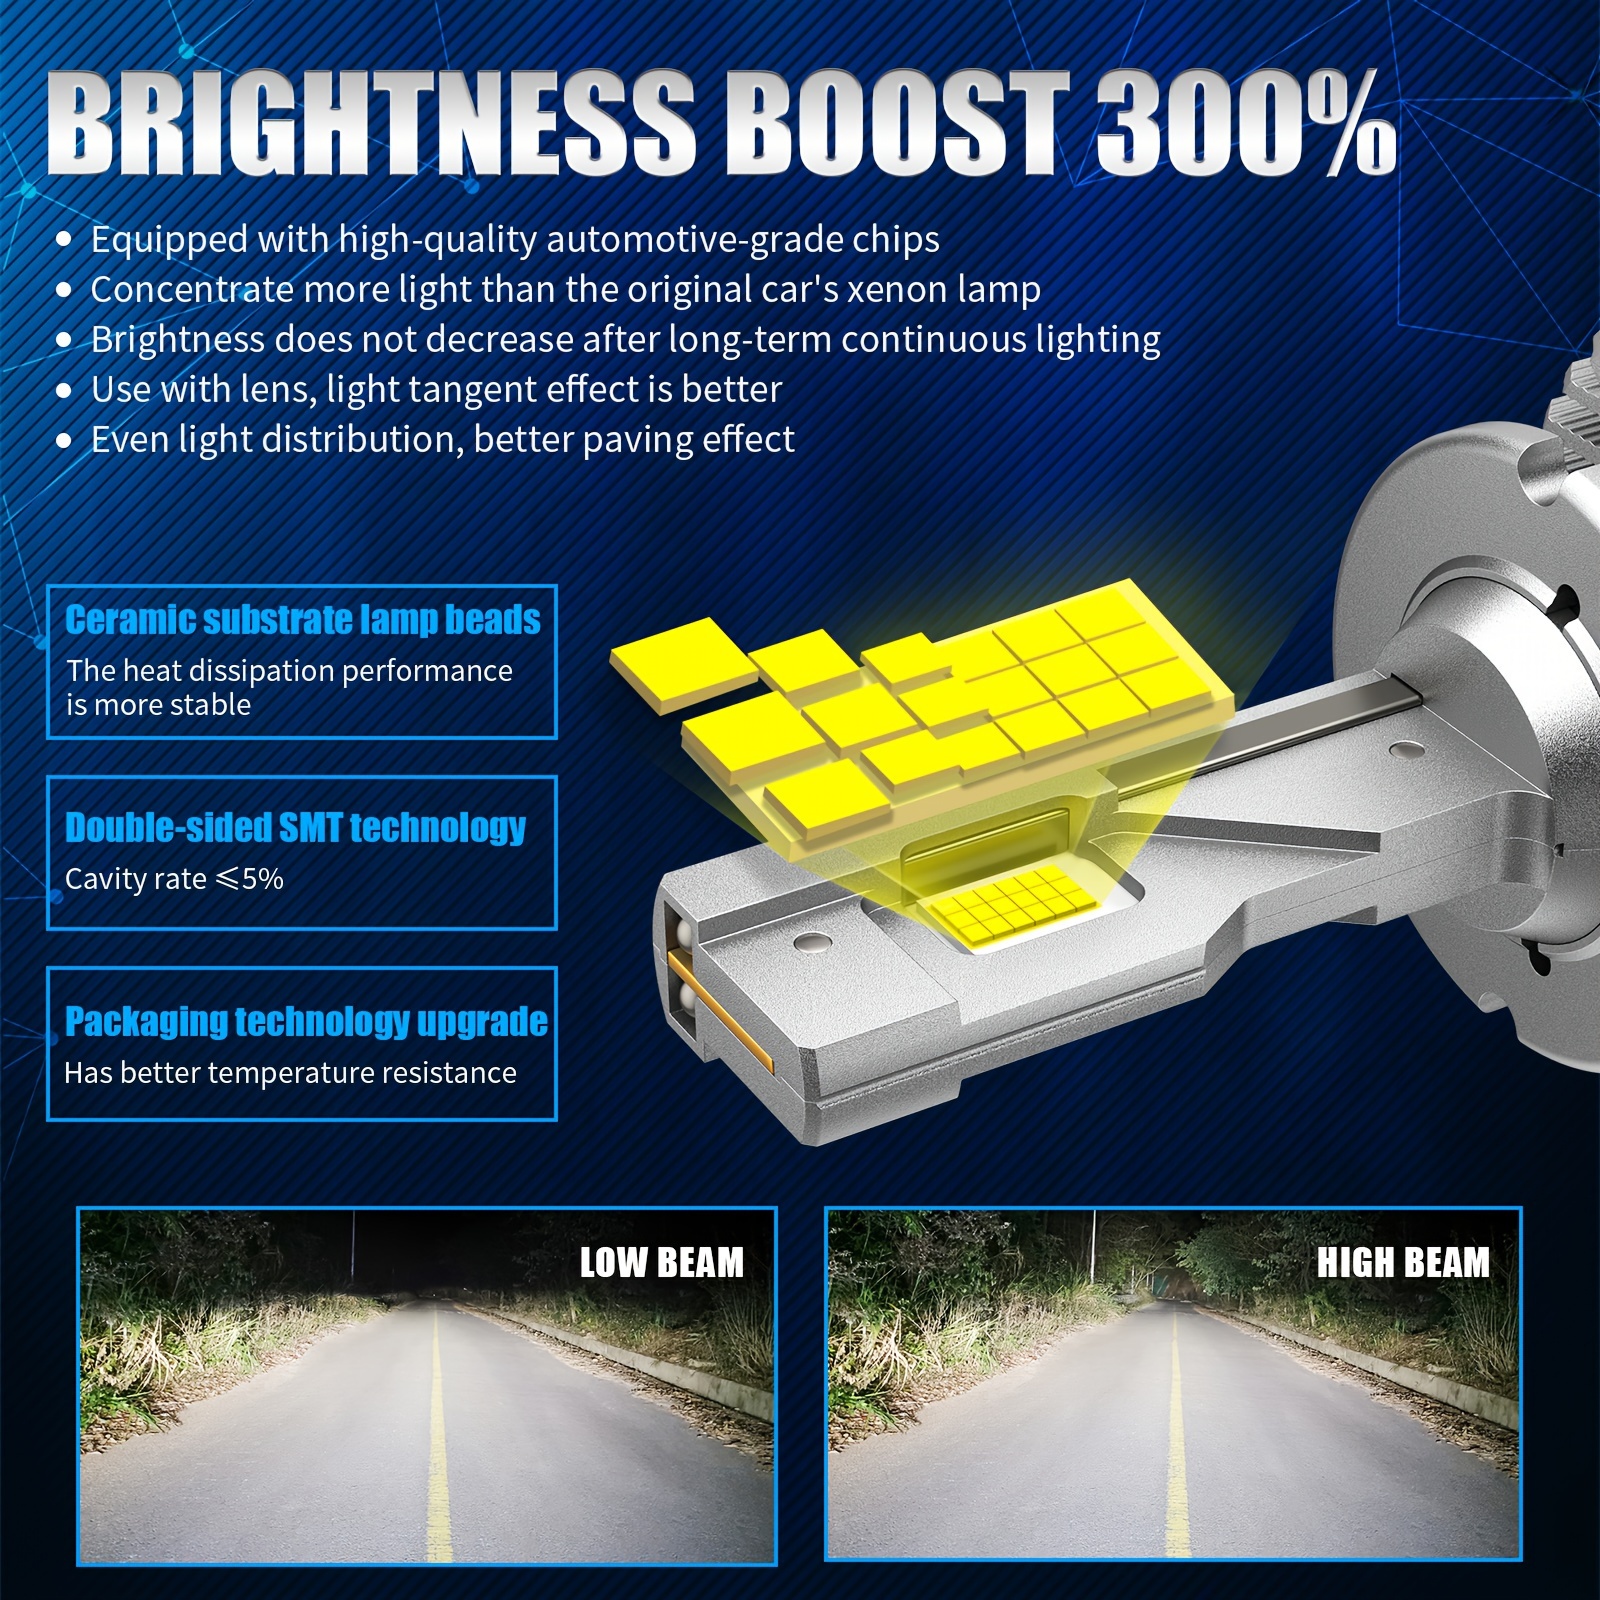 D2S D2R 70W 6000K LED Headlights Xenon Bulbs Super Bright